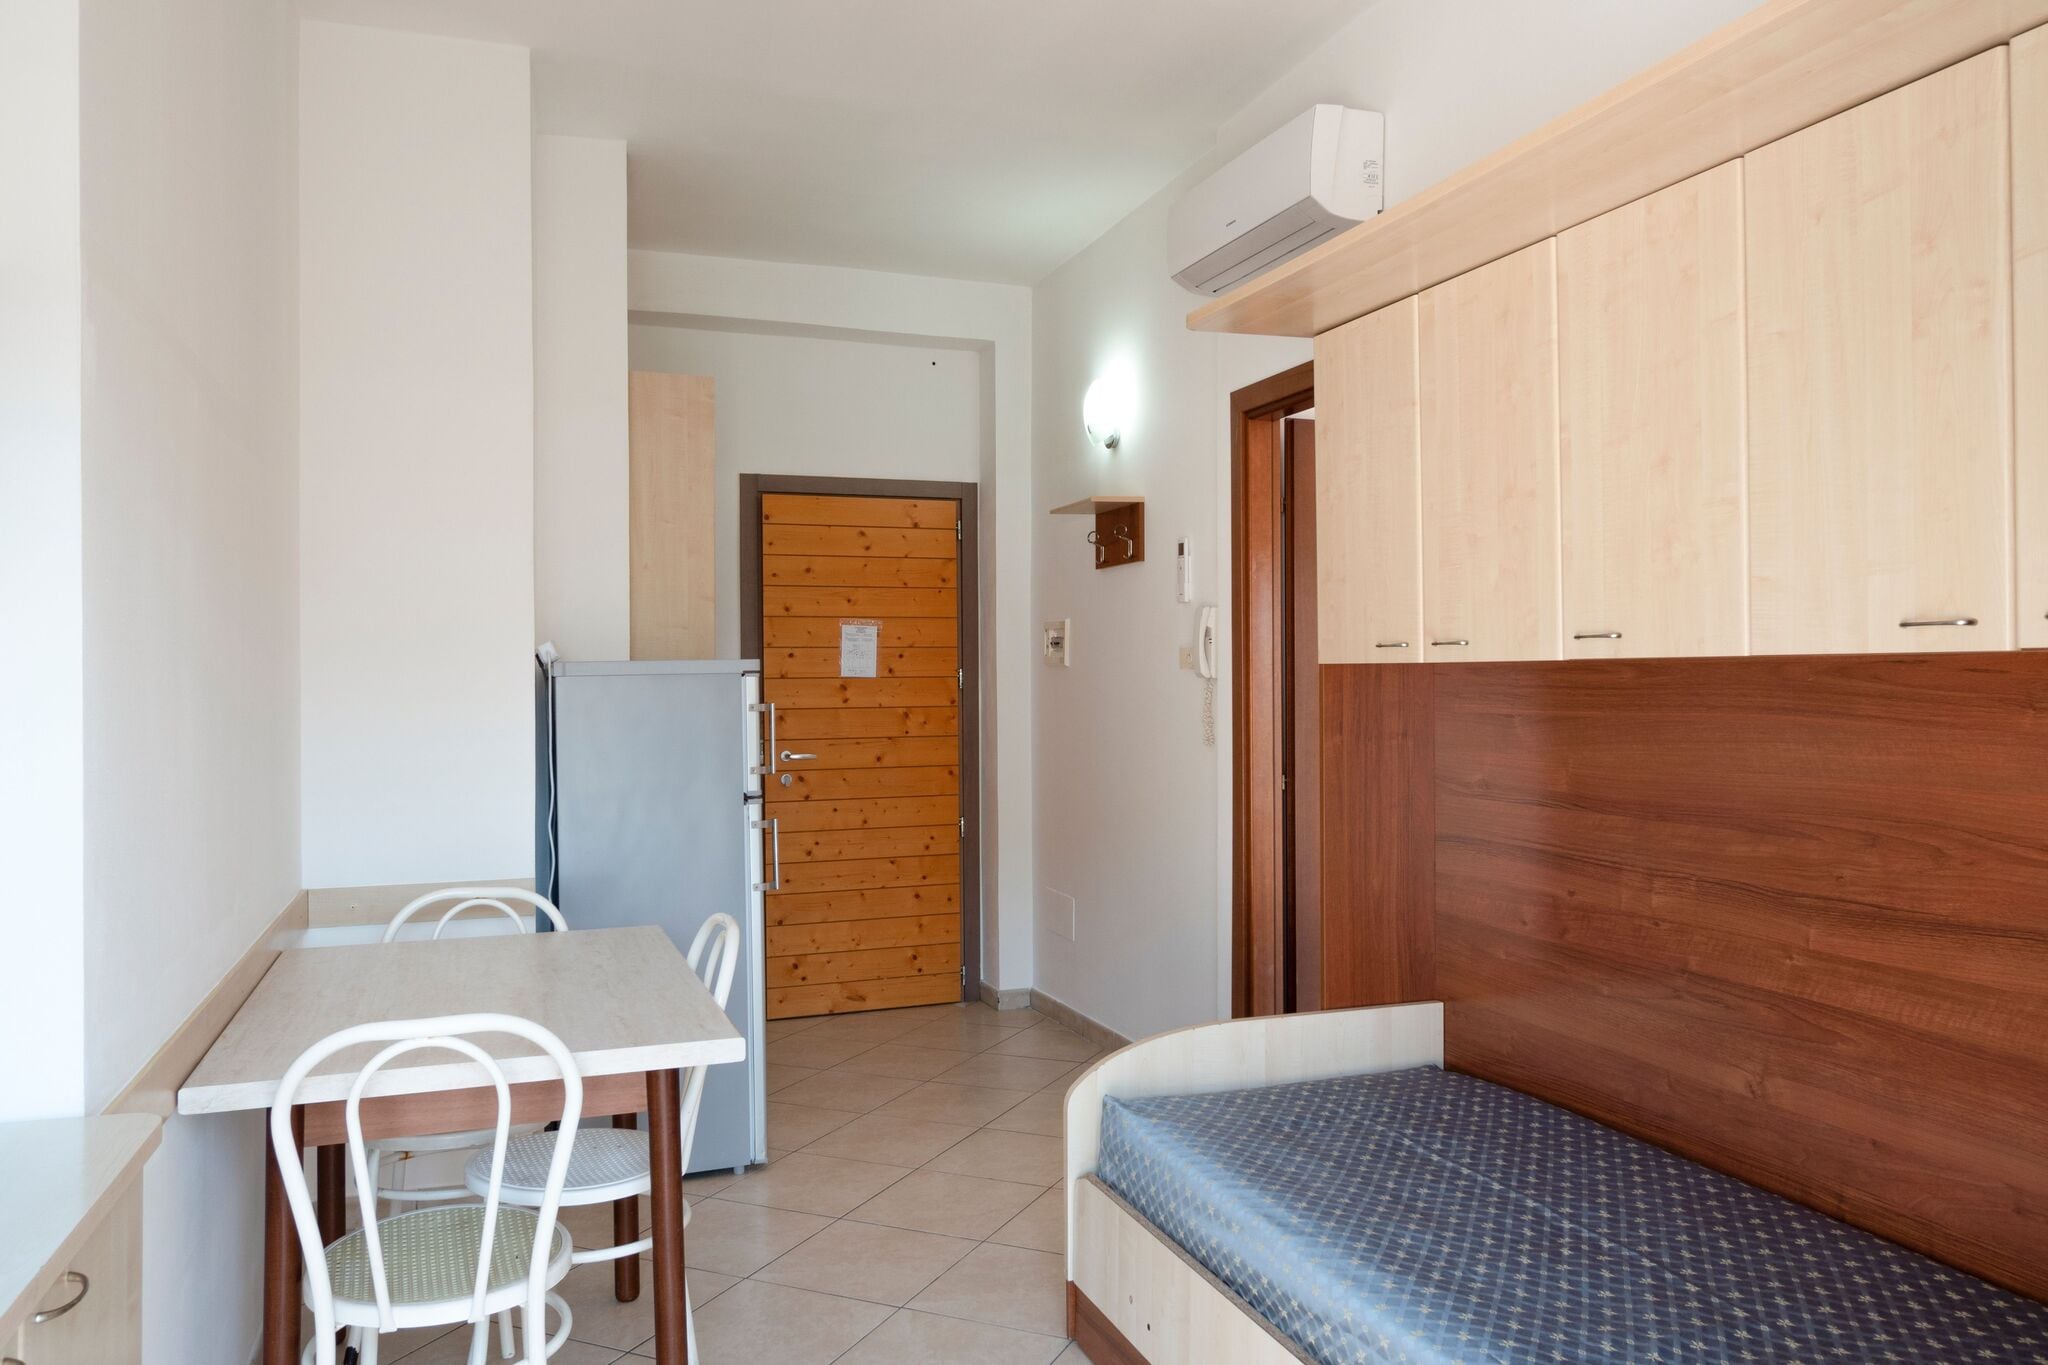 Appartement am Meer in Rimini mit Lift